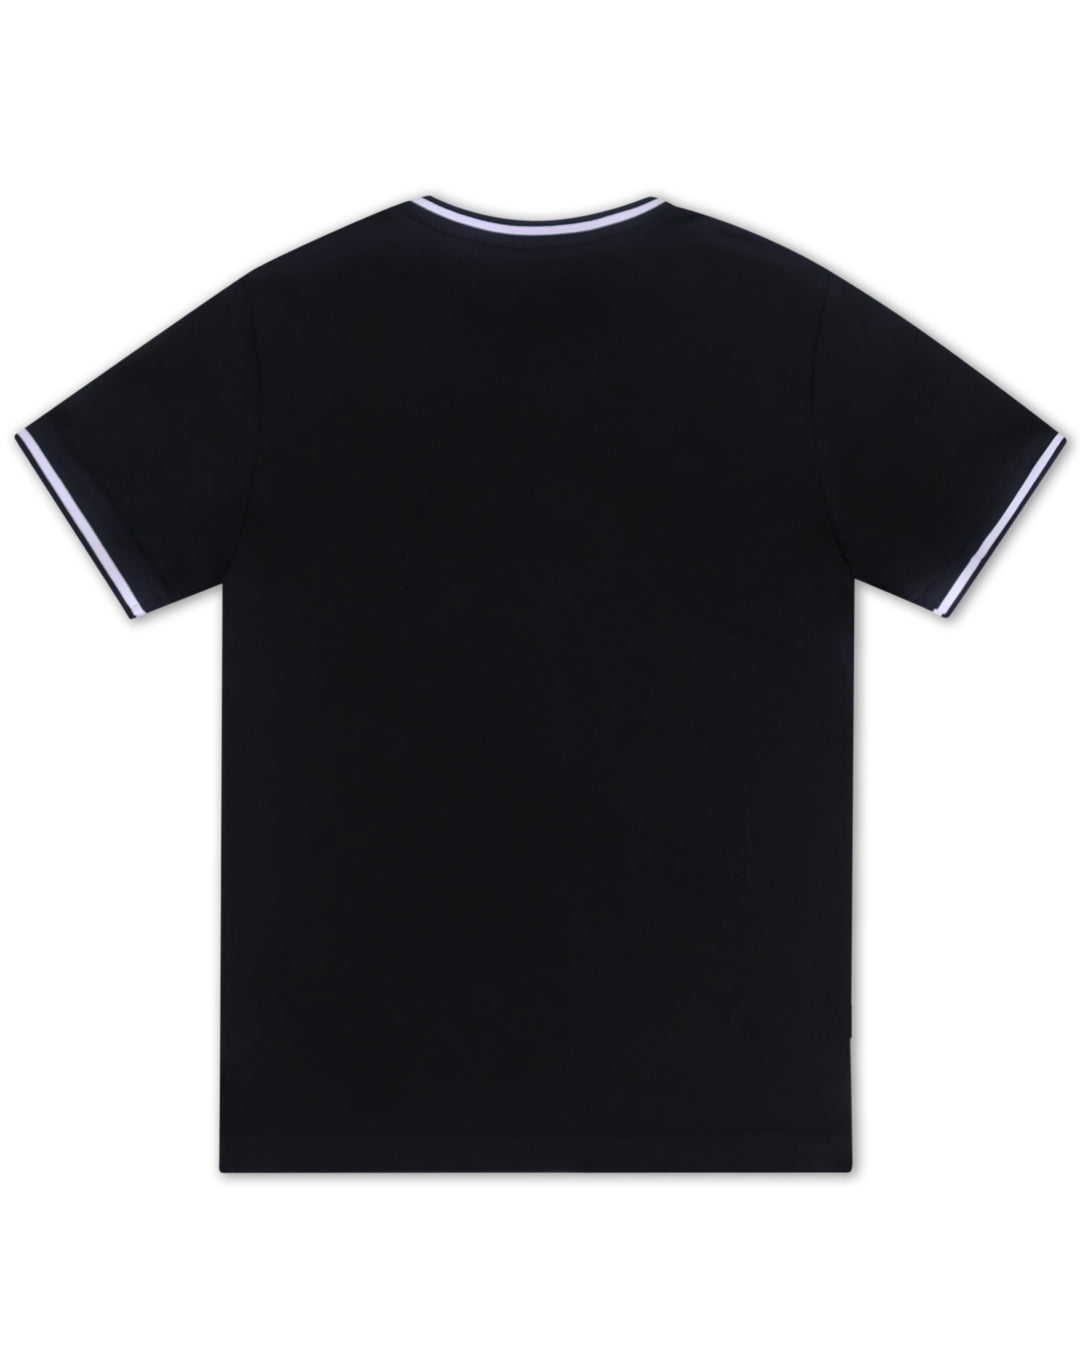 Club Baseball Jersey in Black/White